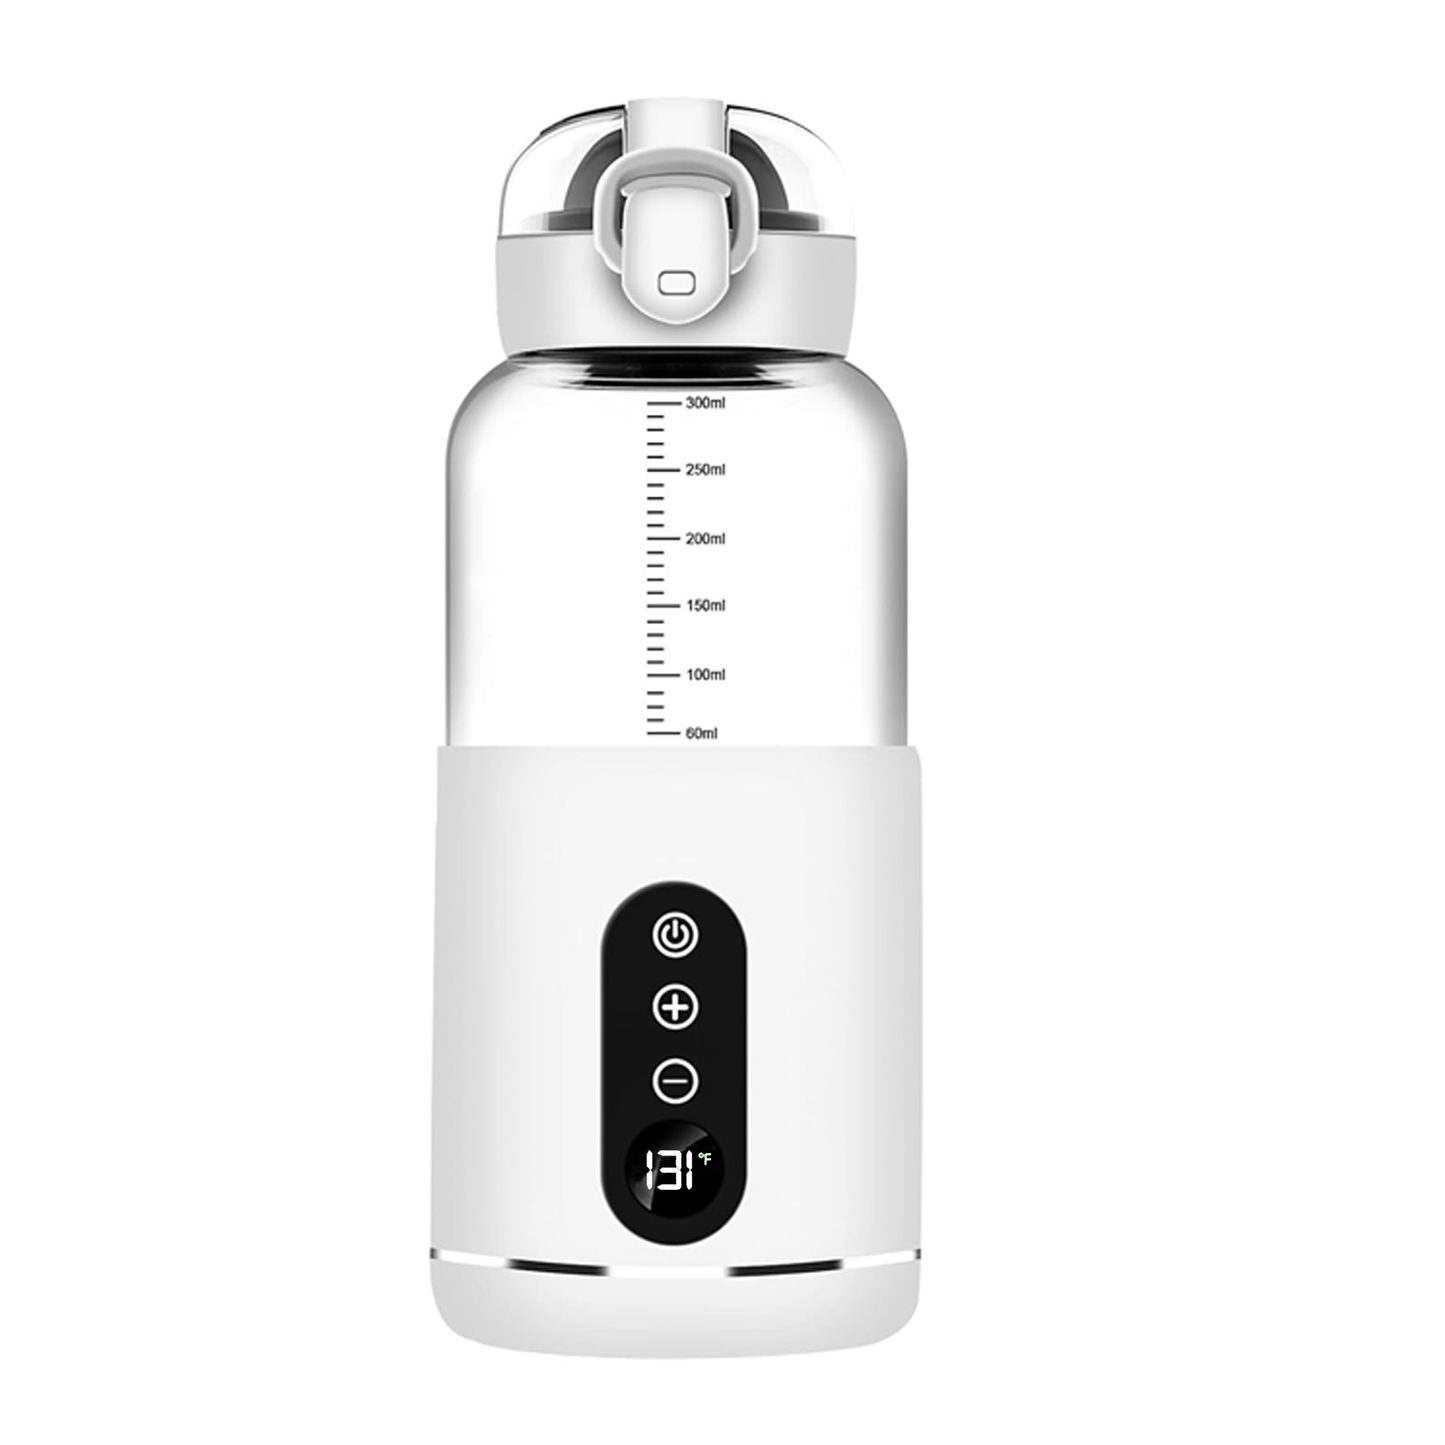 Glass Baby Portable Bottle Warmer 10 oz.